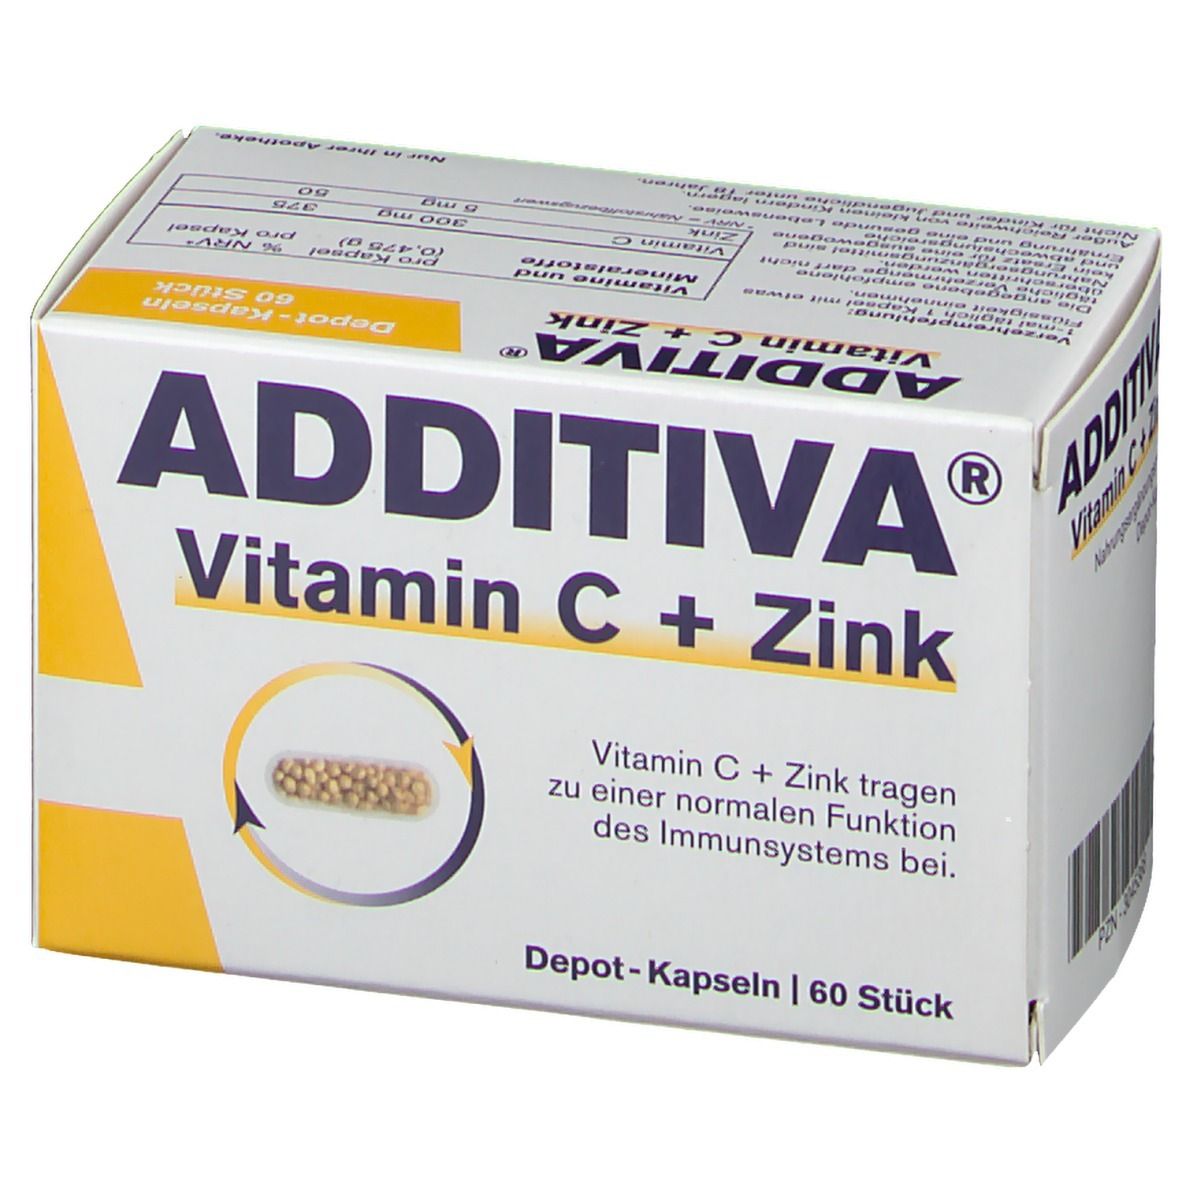 ADDITIVA® Vitamin C + Zink Depot 300 mg Kapseln